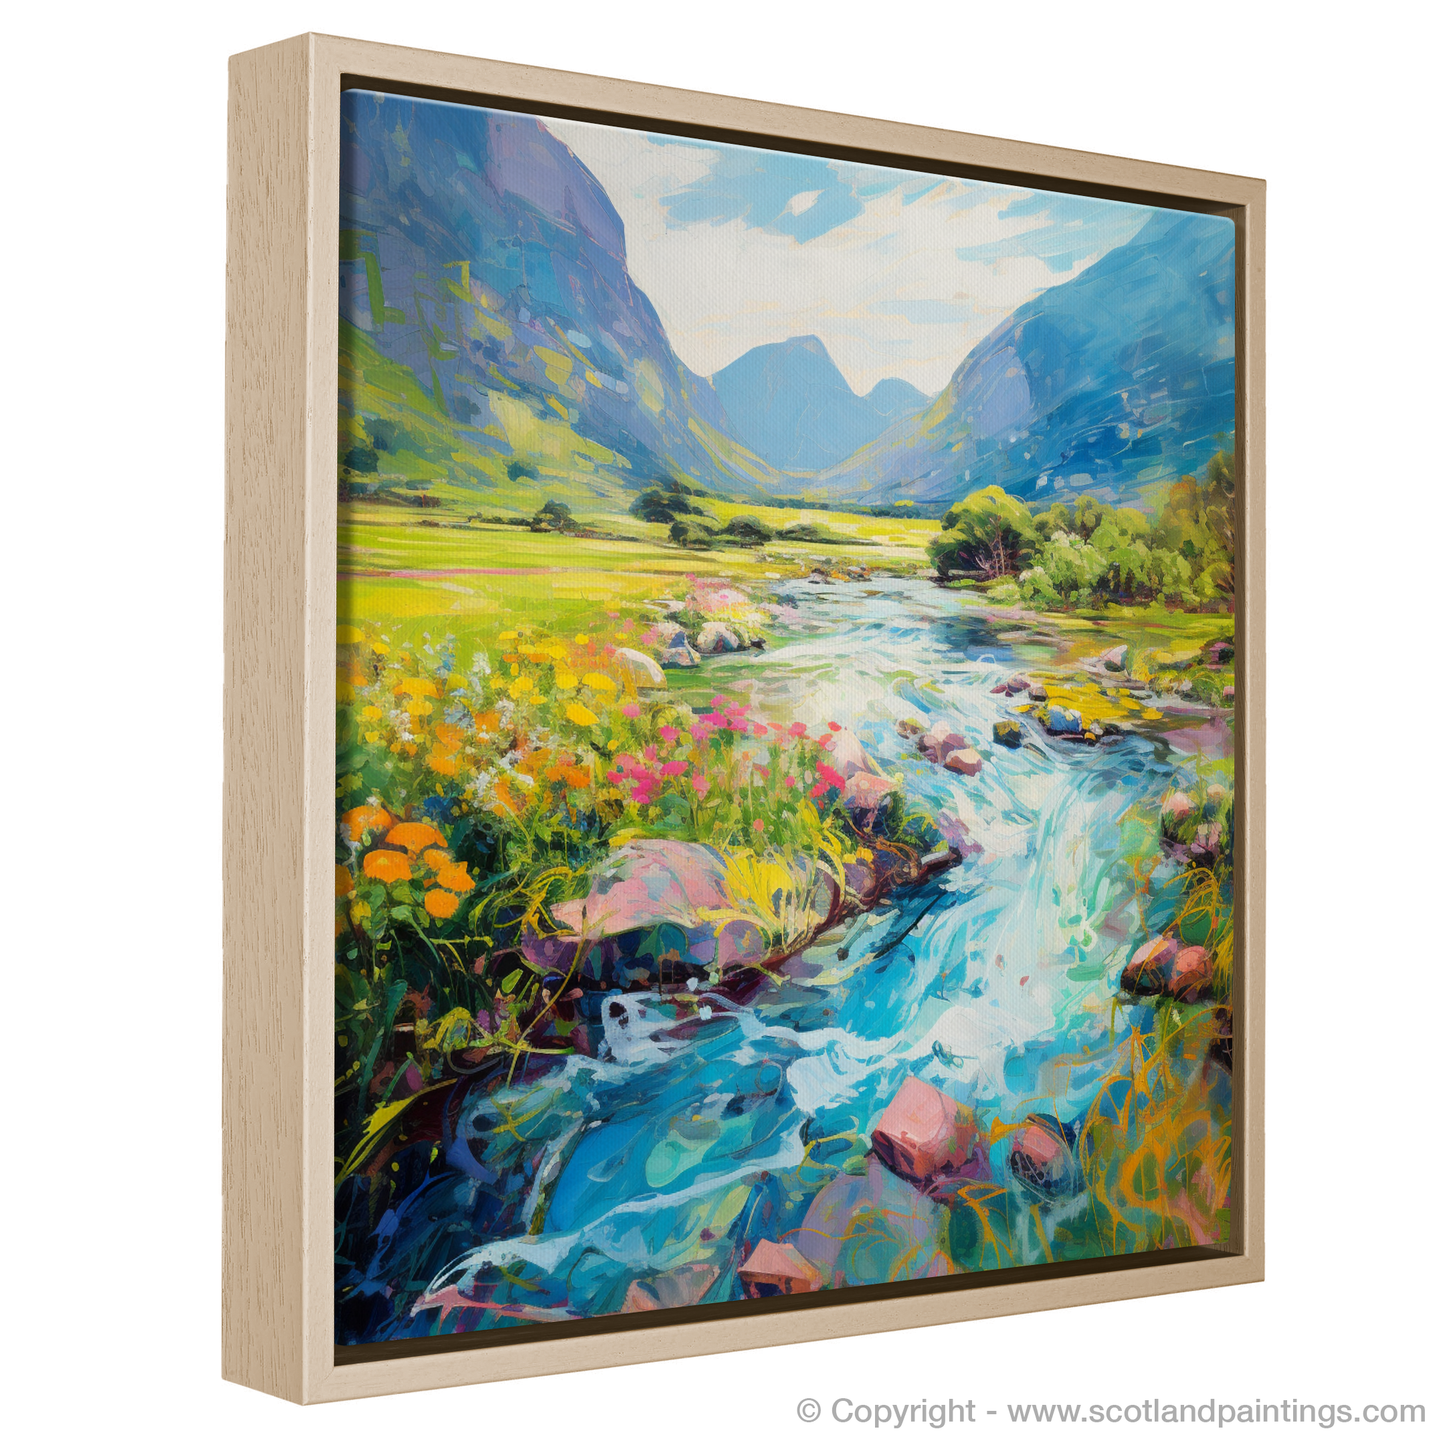 Painting and Art Print of River in Glencoe during summer entitled "Summer Serenade in Glencoe Highlands".